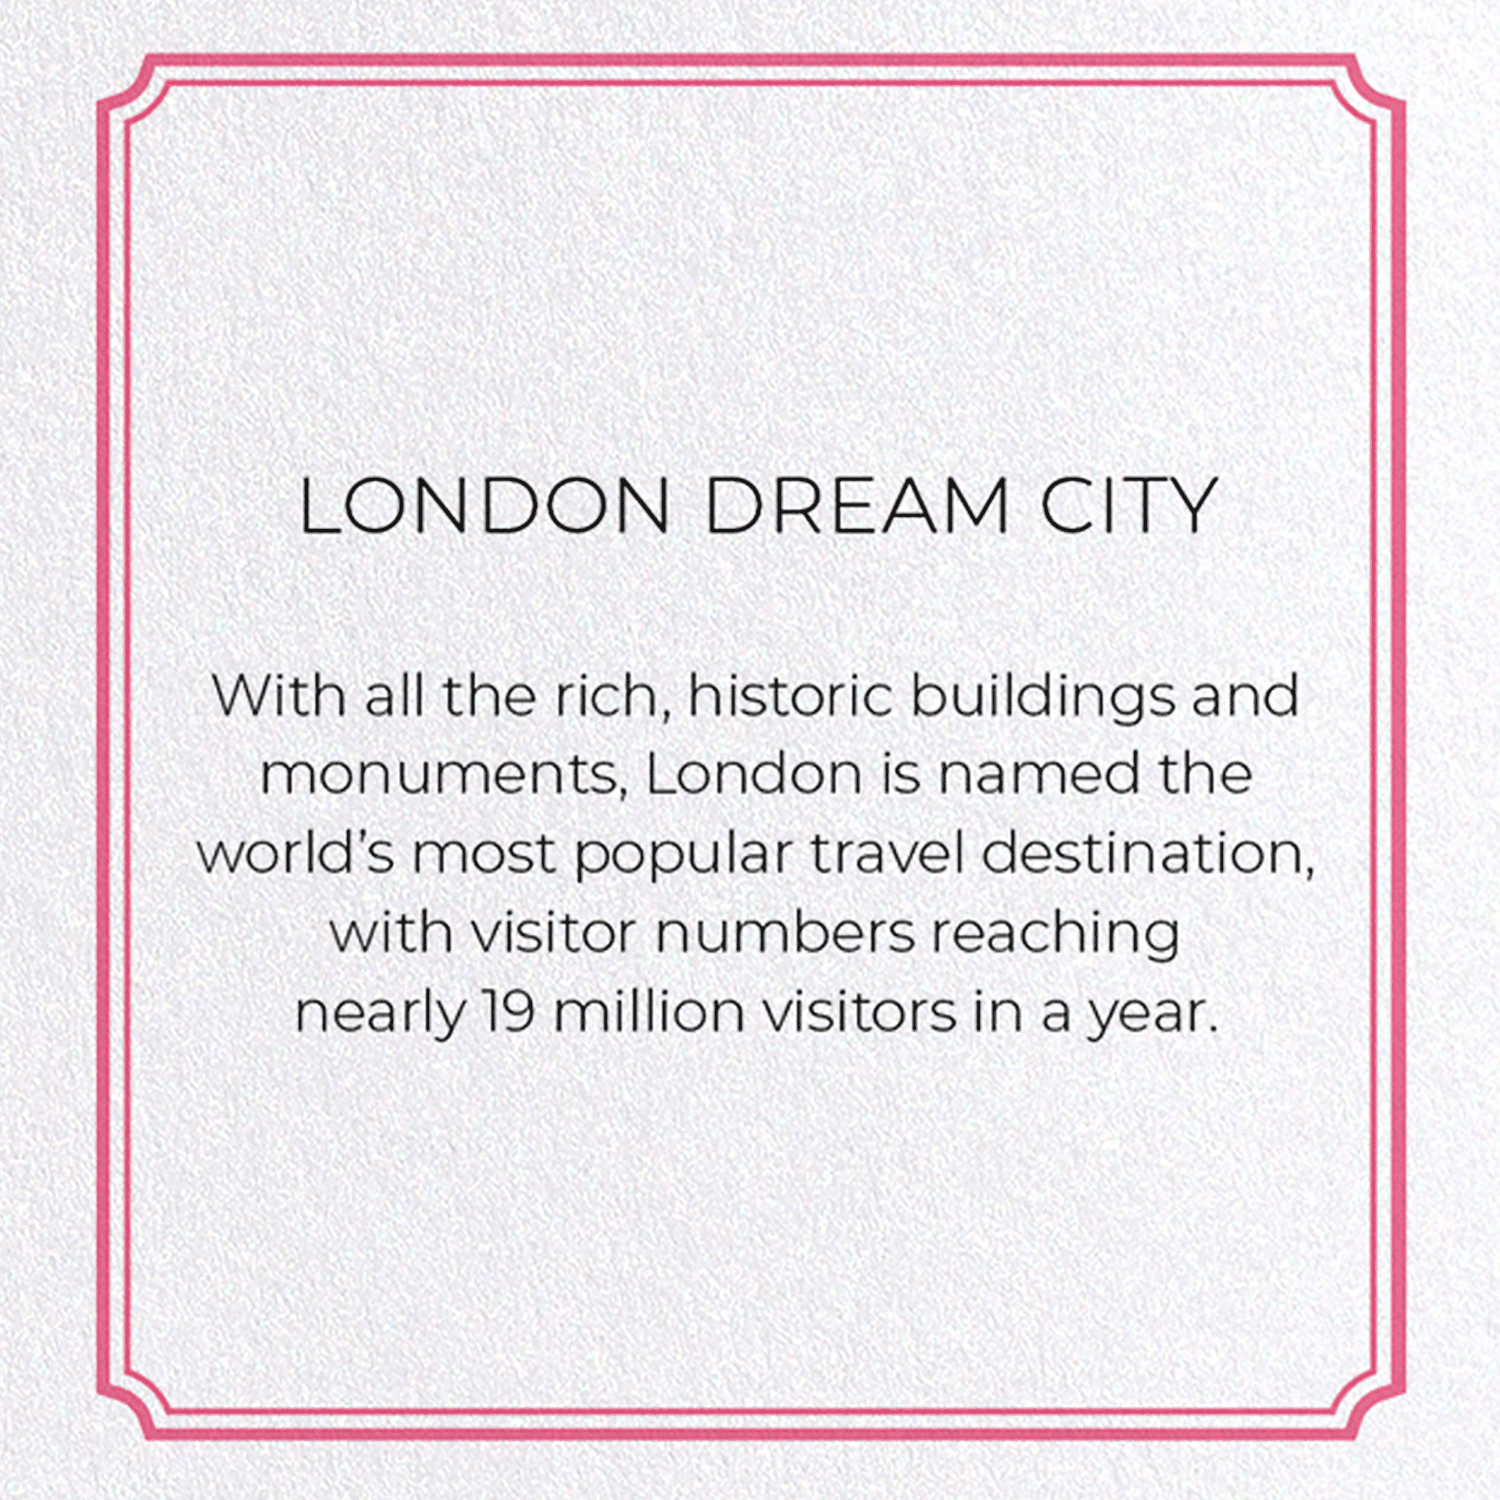 LONDON DREAM CITY